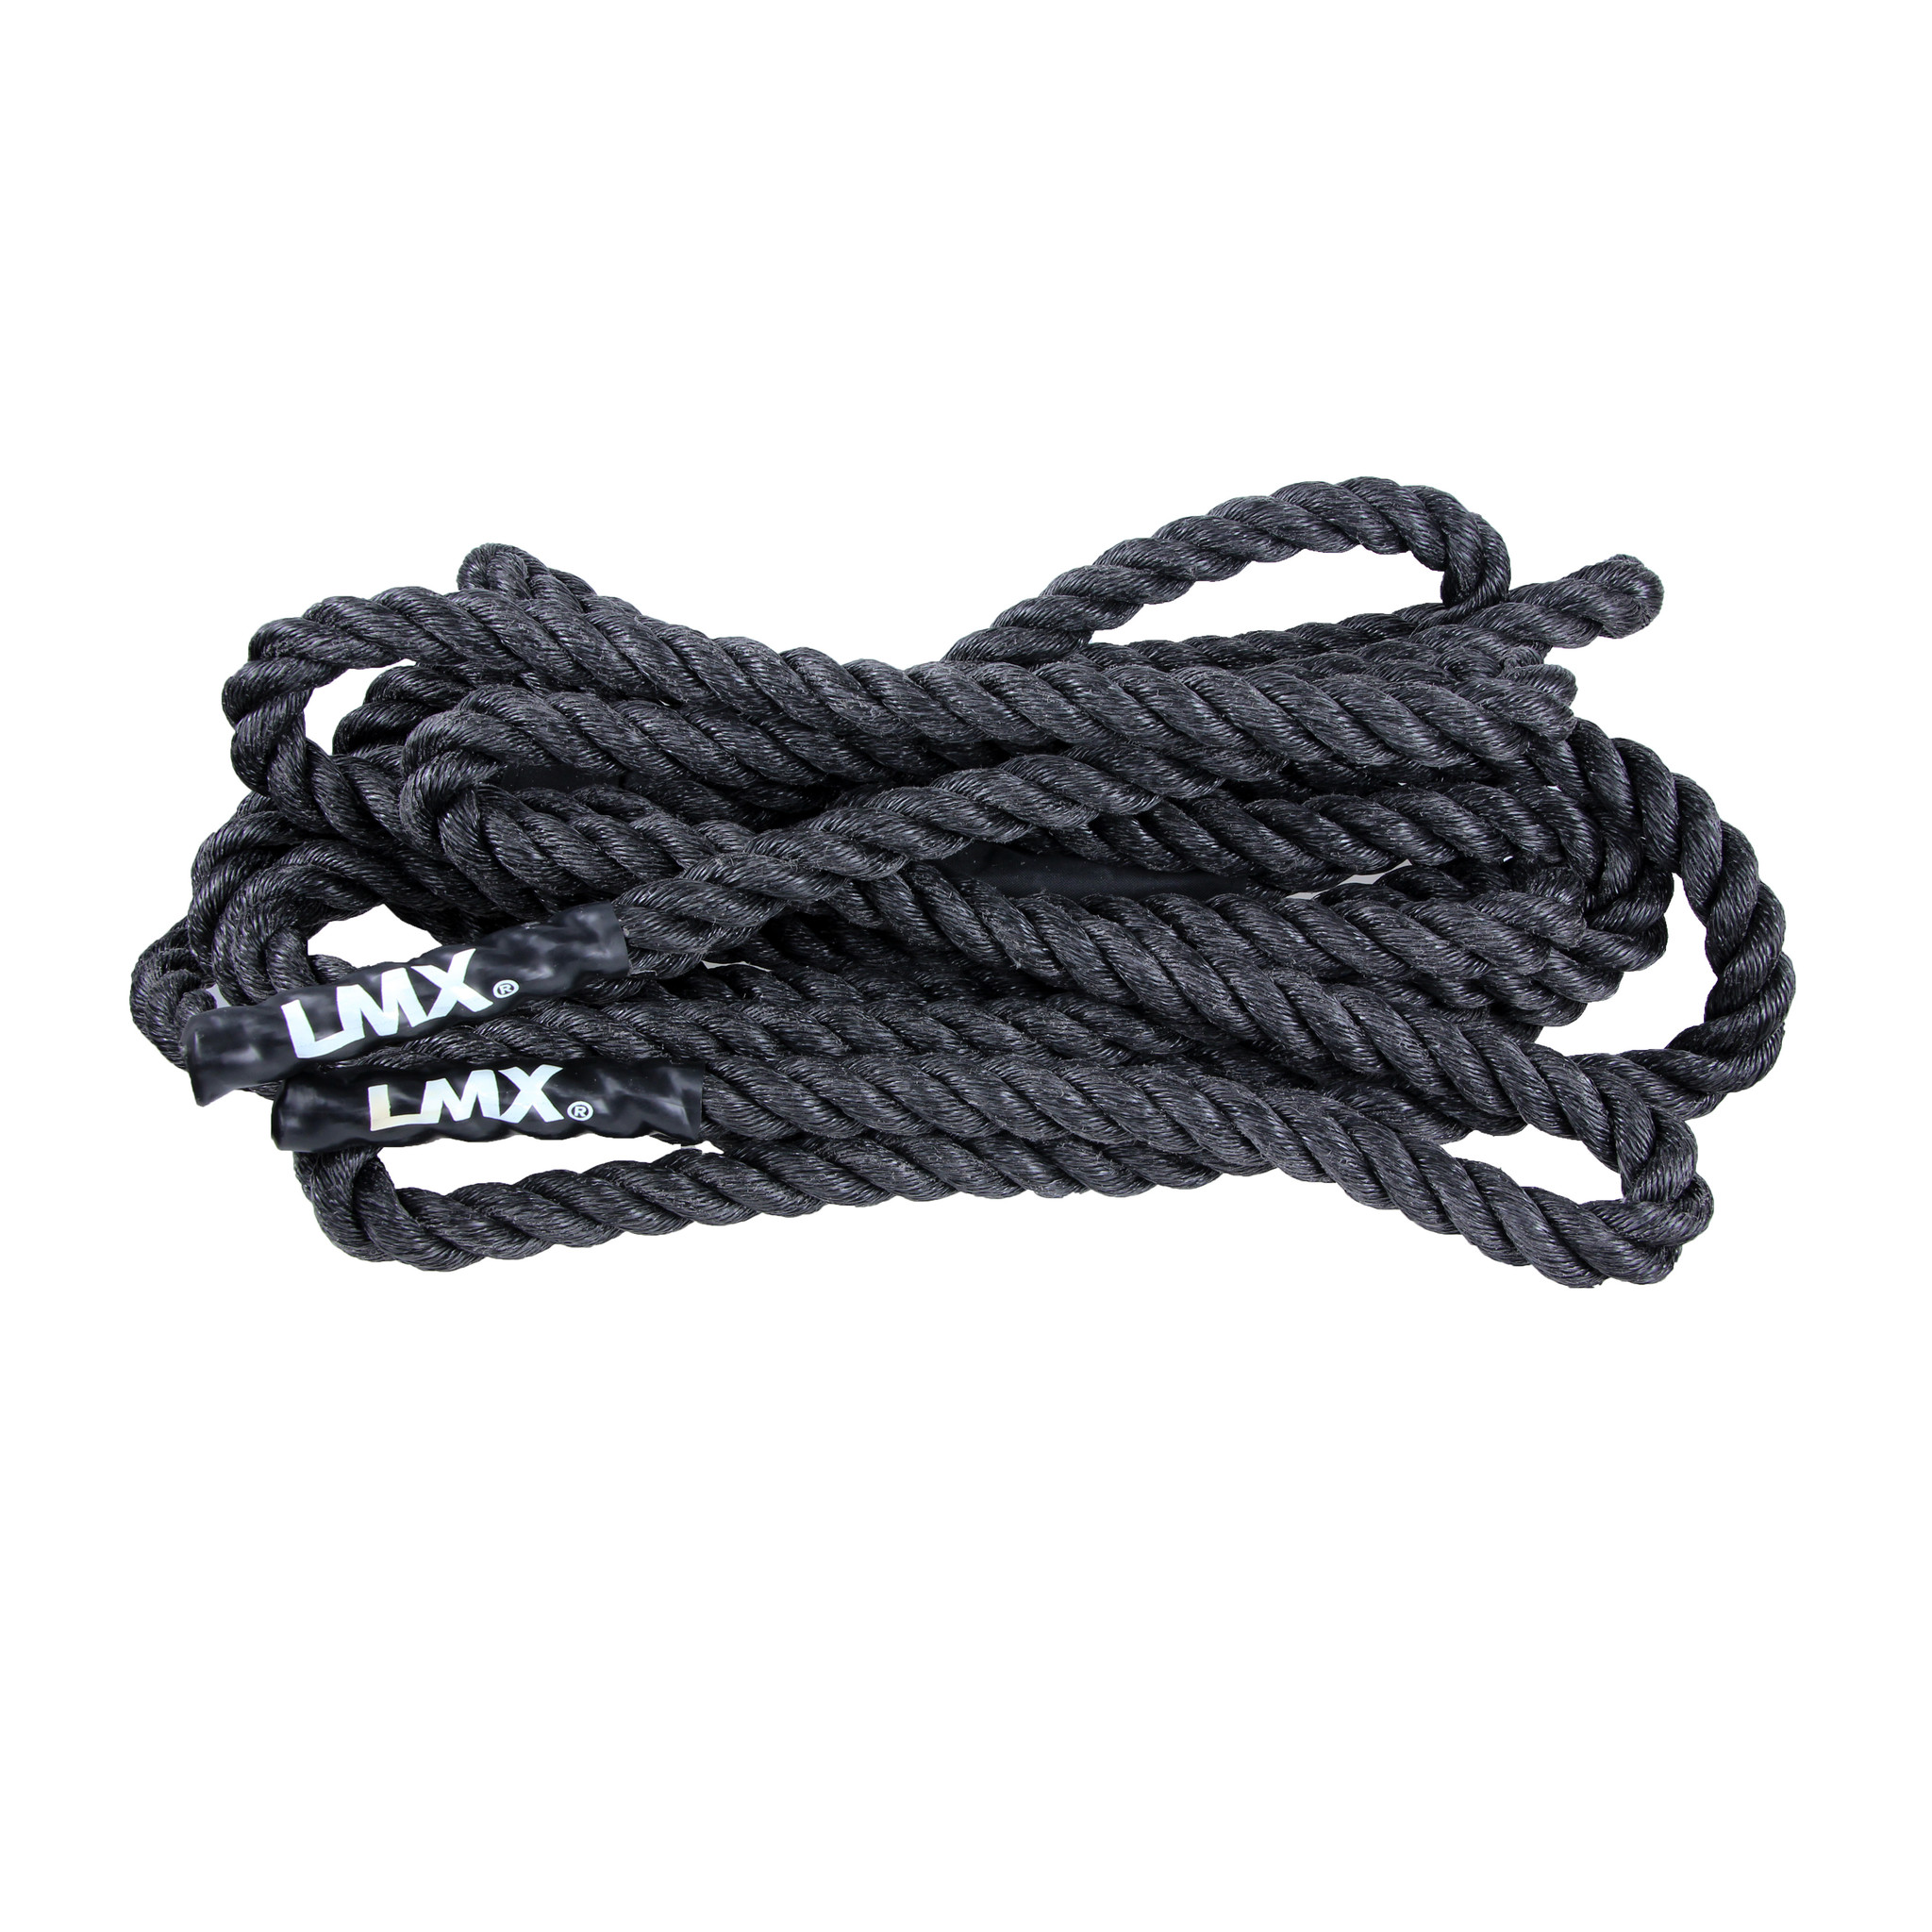 LMX1285 LMX.® Battle rope 15m (various sizes) - Lifemaxx